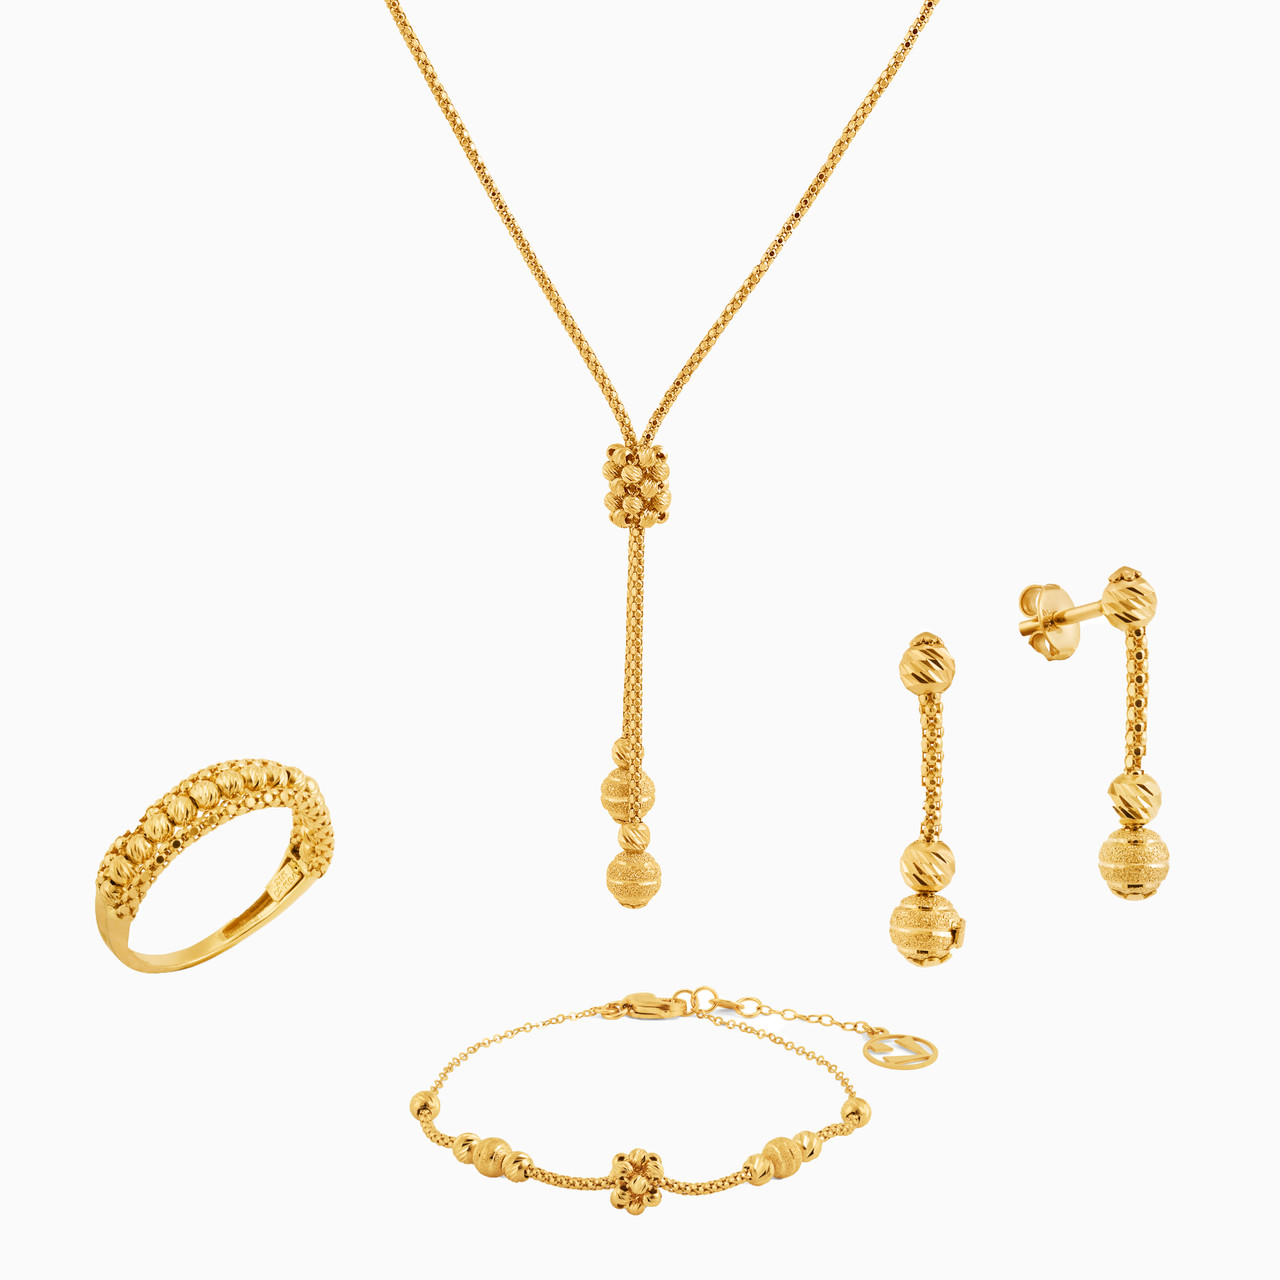 21K Gold Jewelry Set -4 Pieces